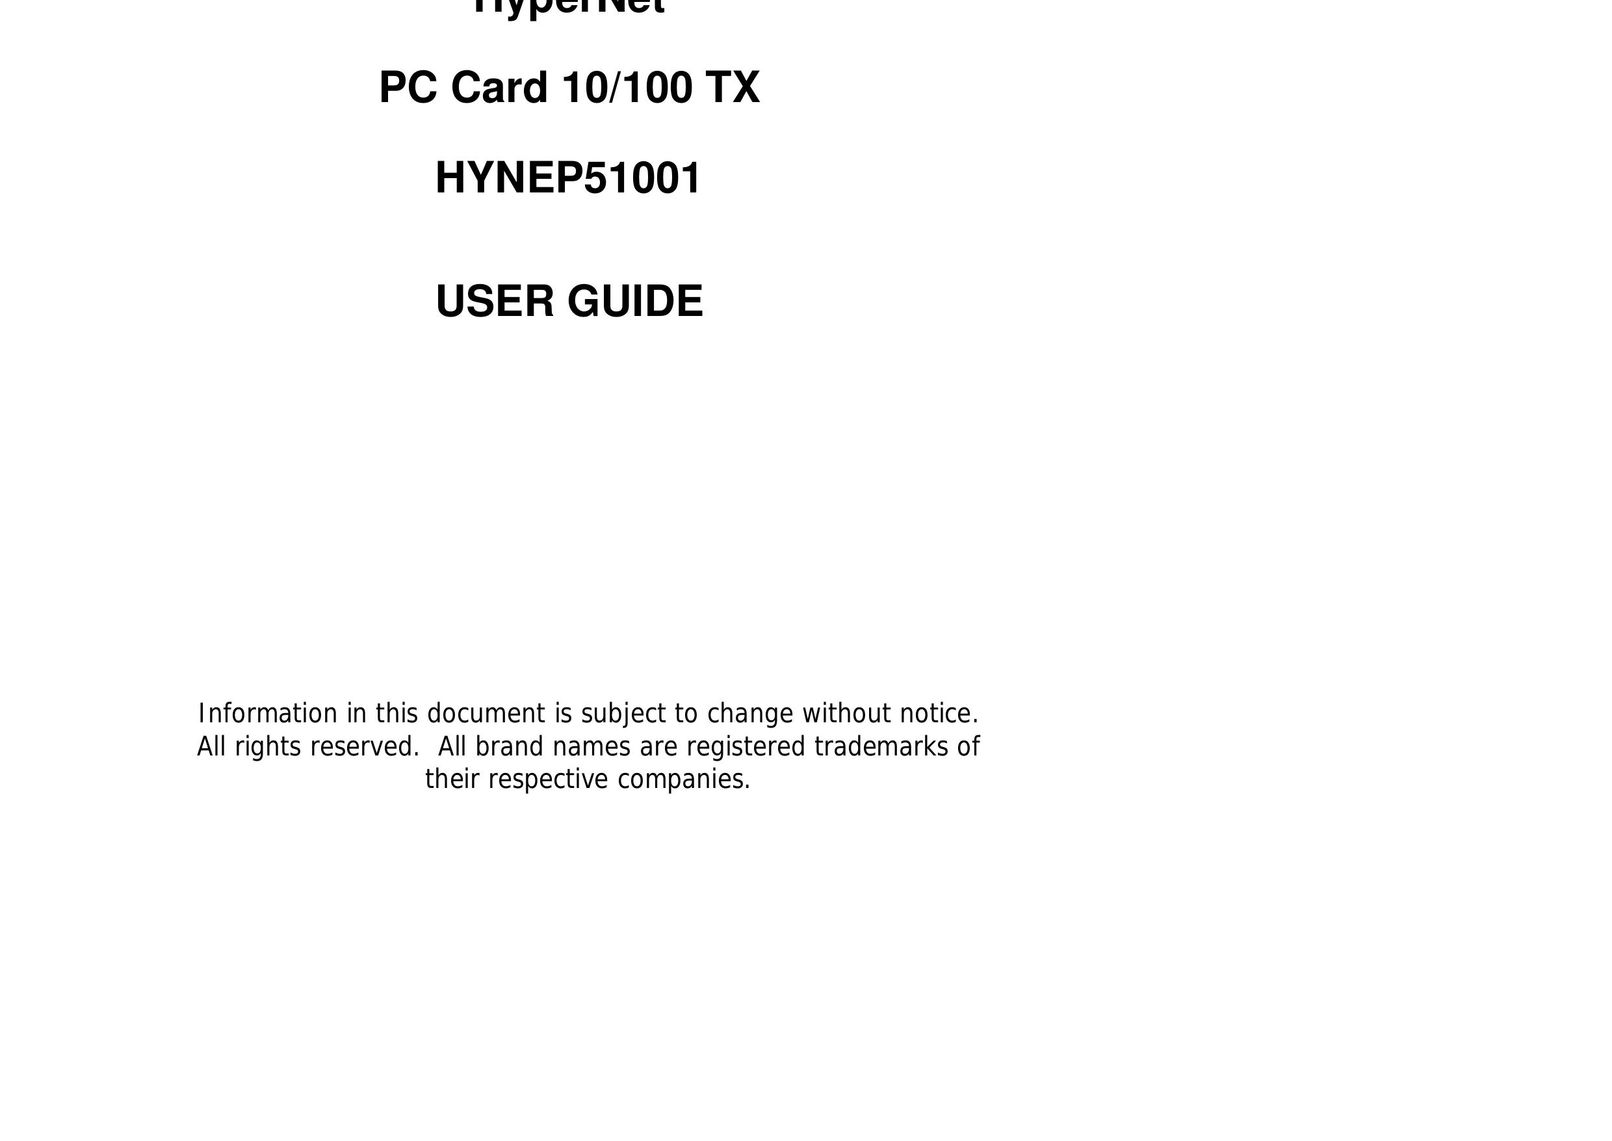 Hypertec PC Card 10/100 TX Network Card User Manual